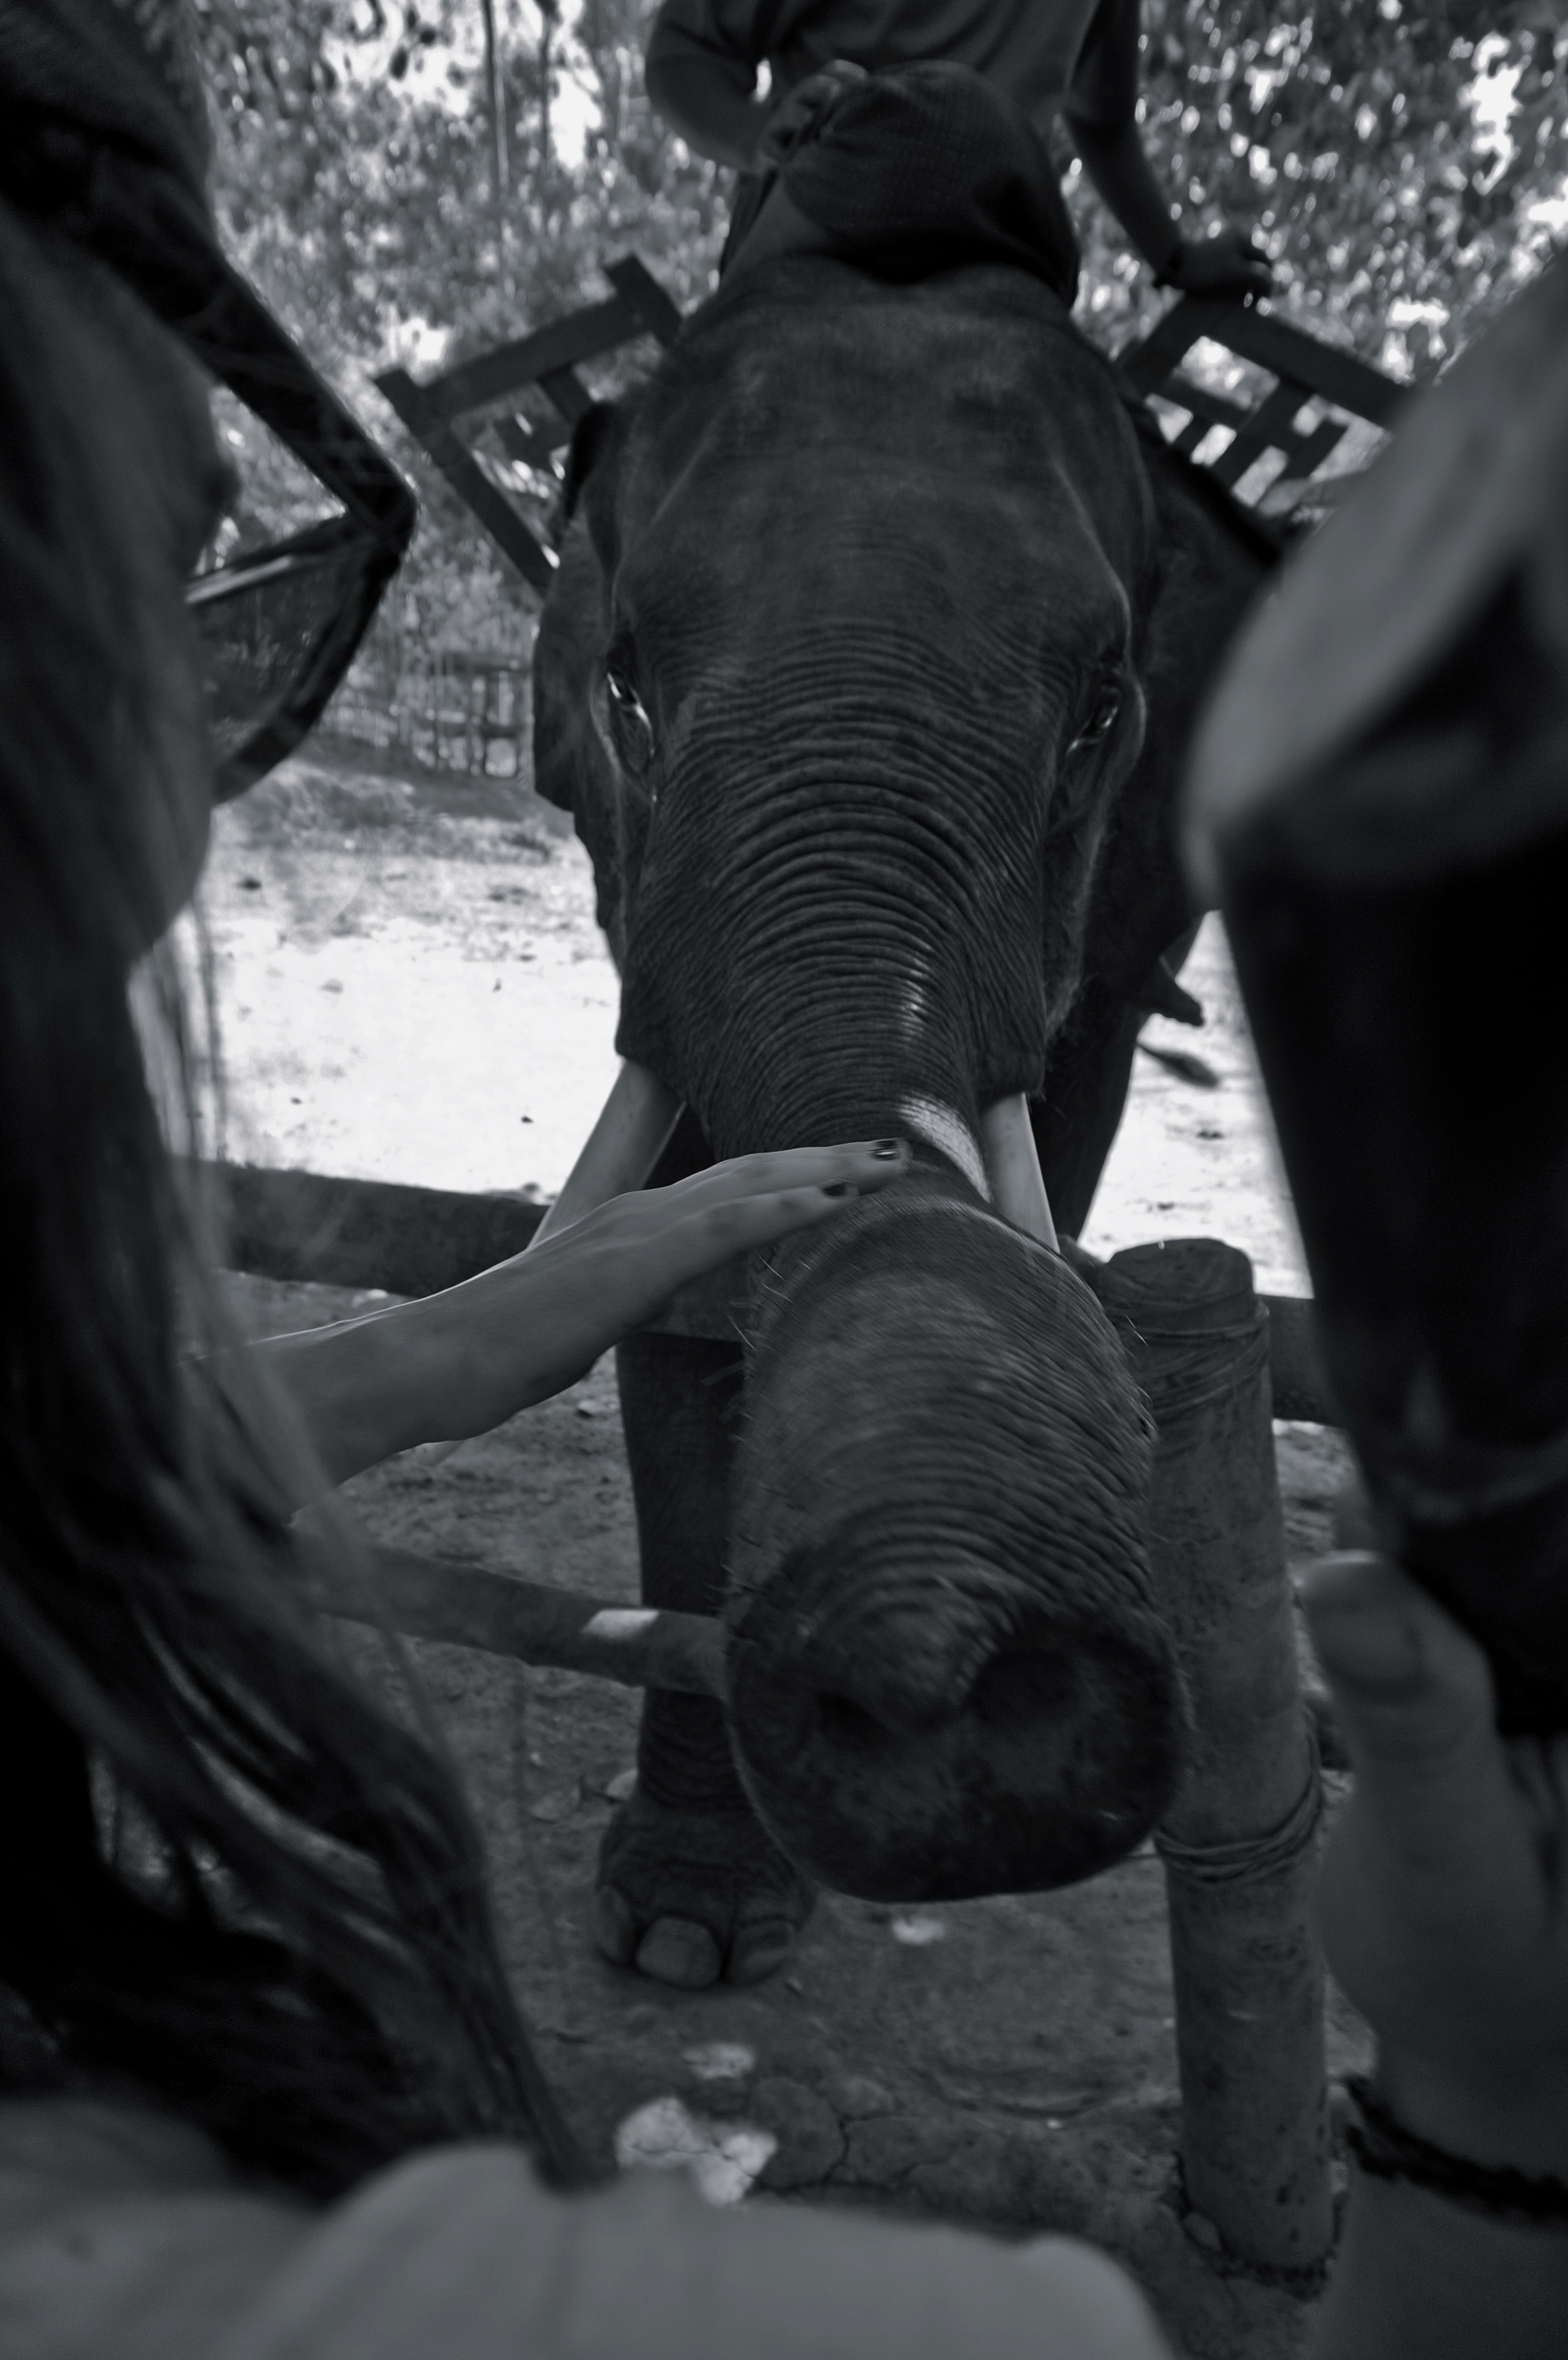 Elephant Camp in Ngwe Saung, Burma